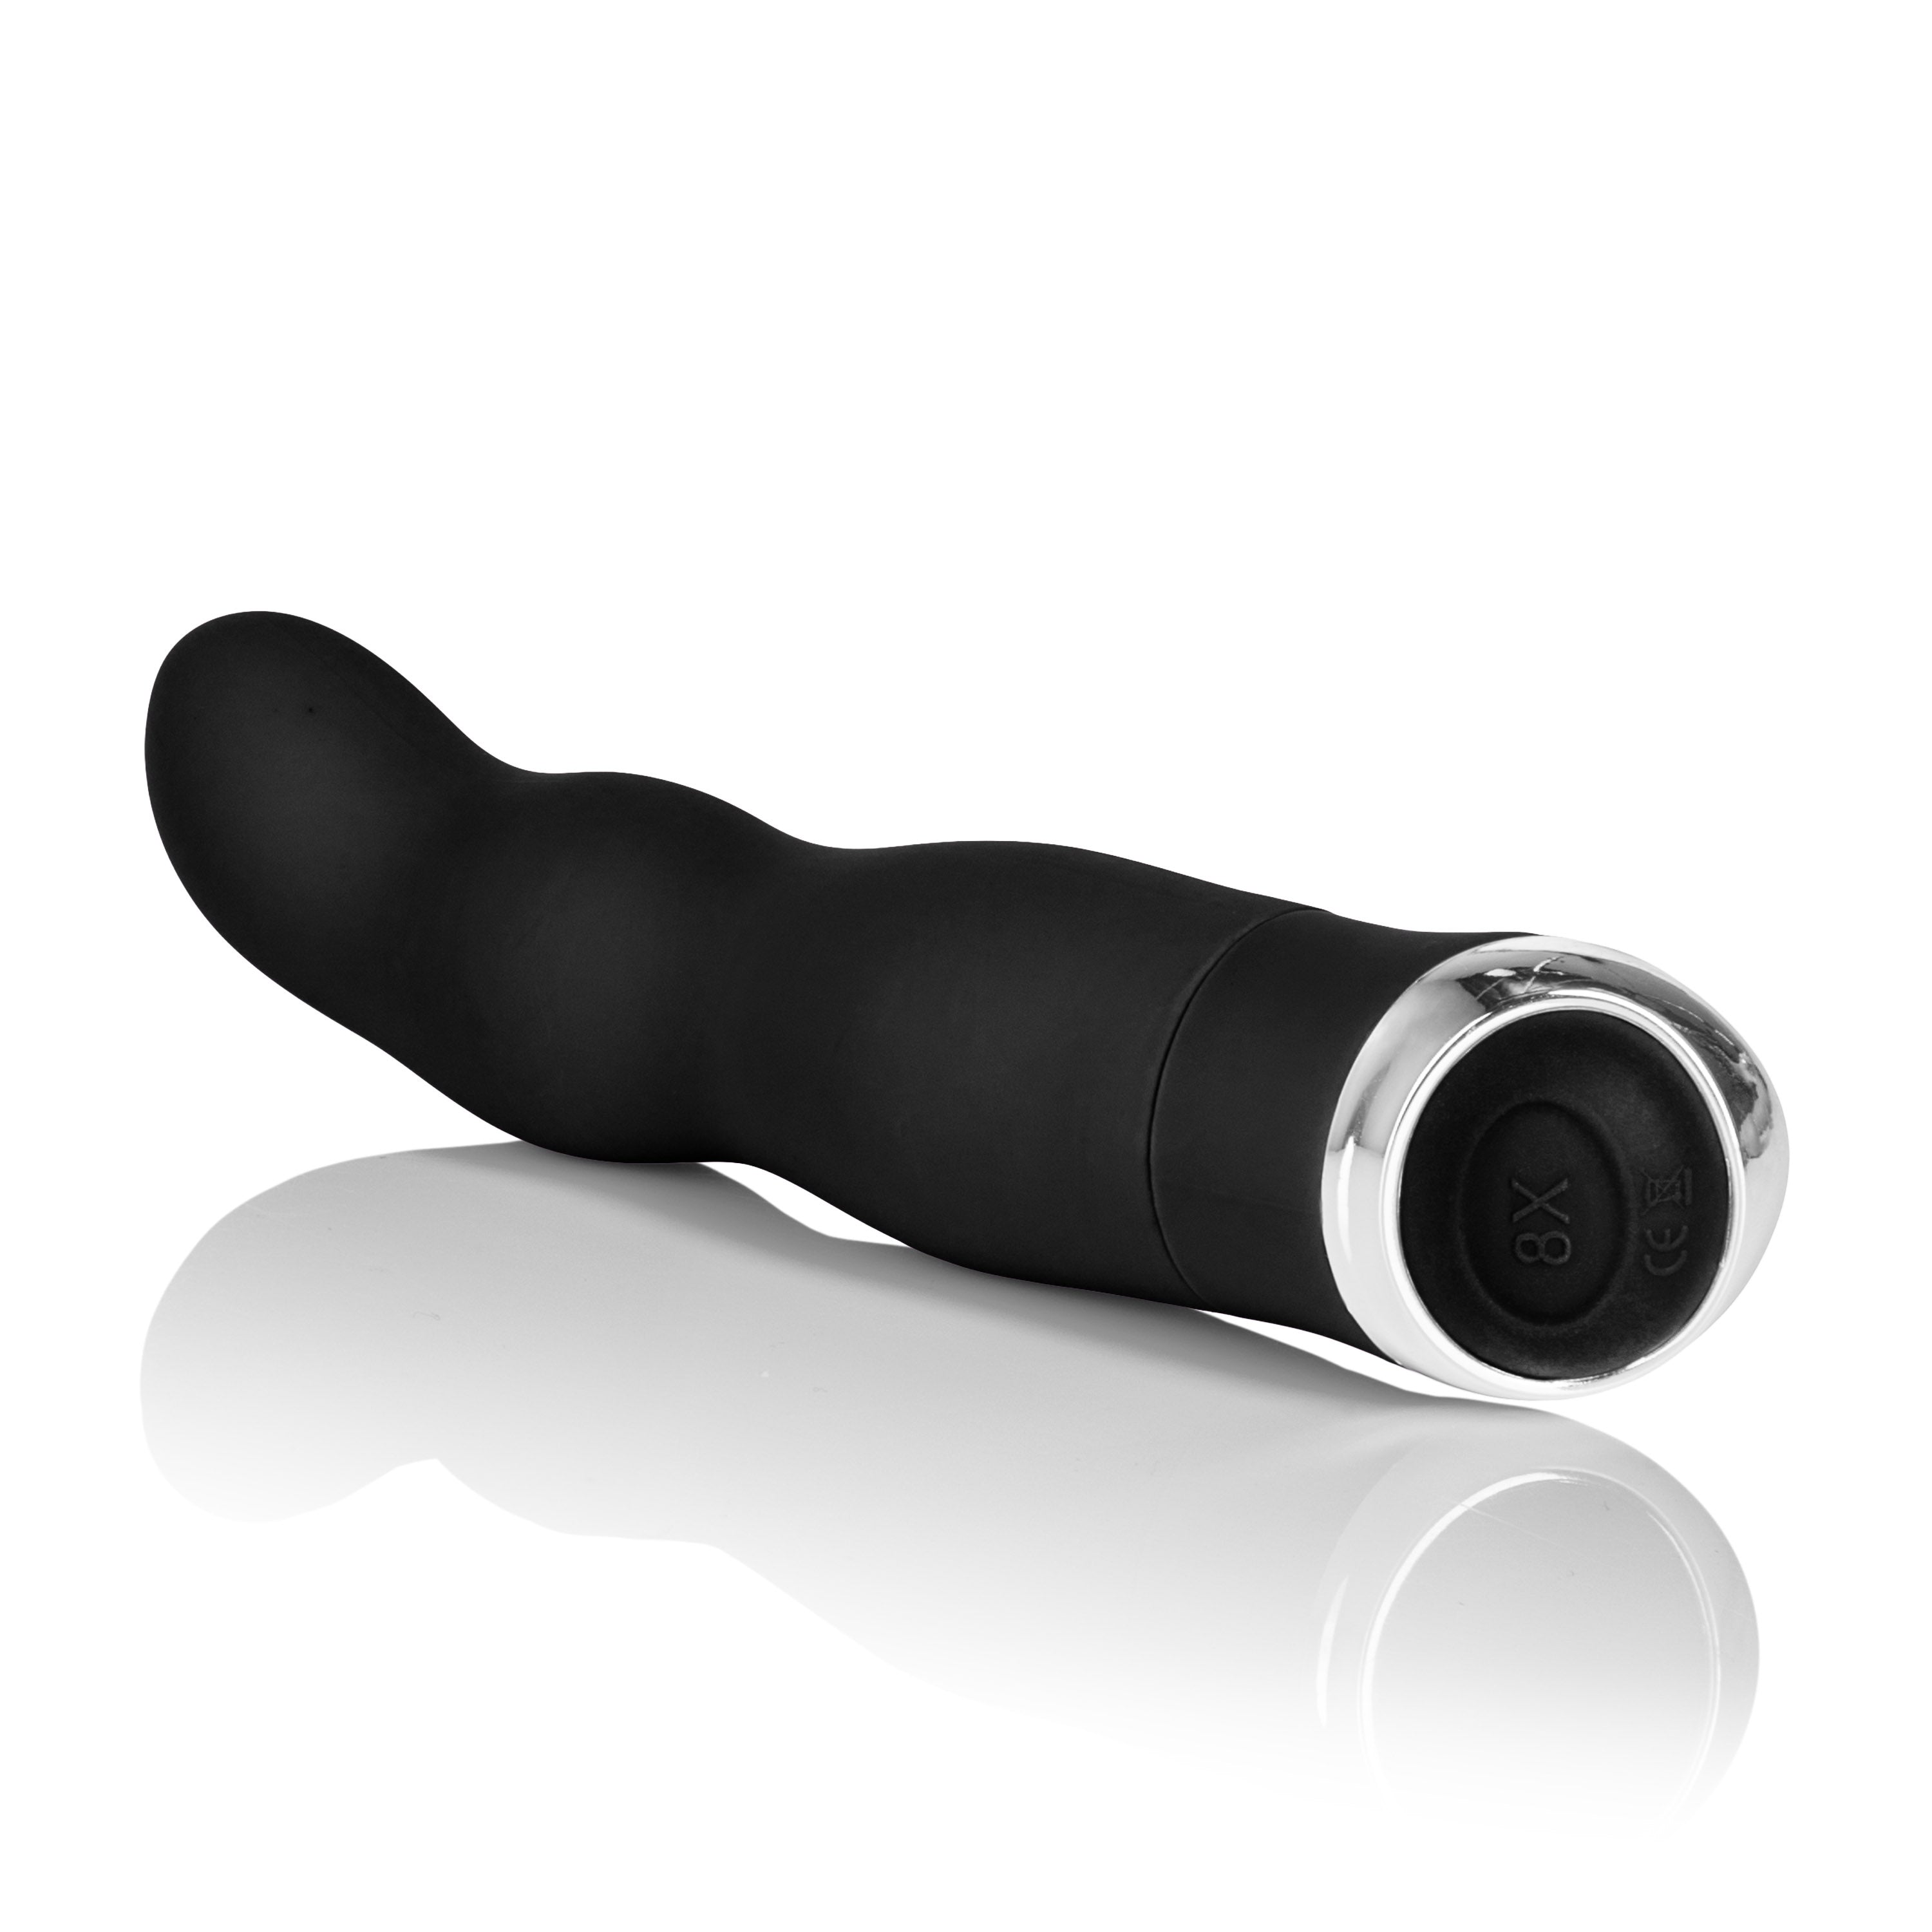 Classic Chic Curve Black - 8 Function Vibrating Massager for Intense Pleasure